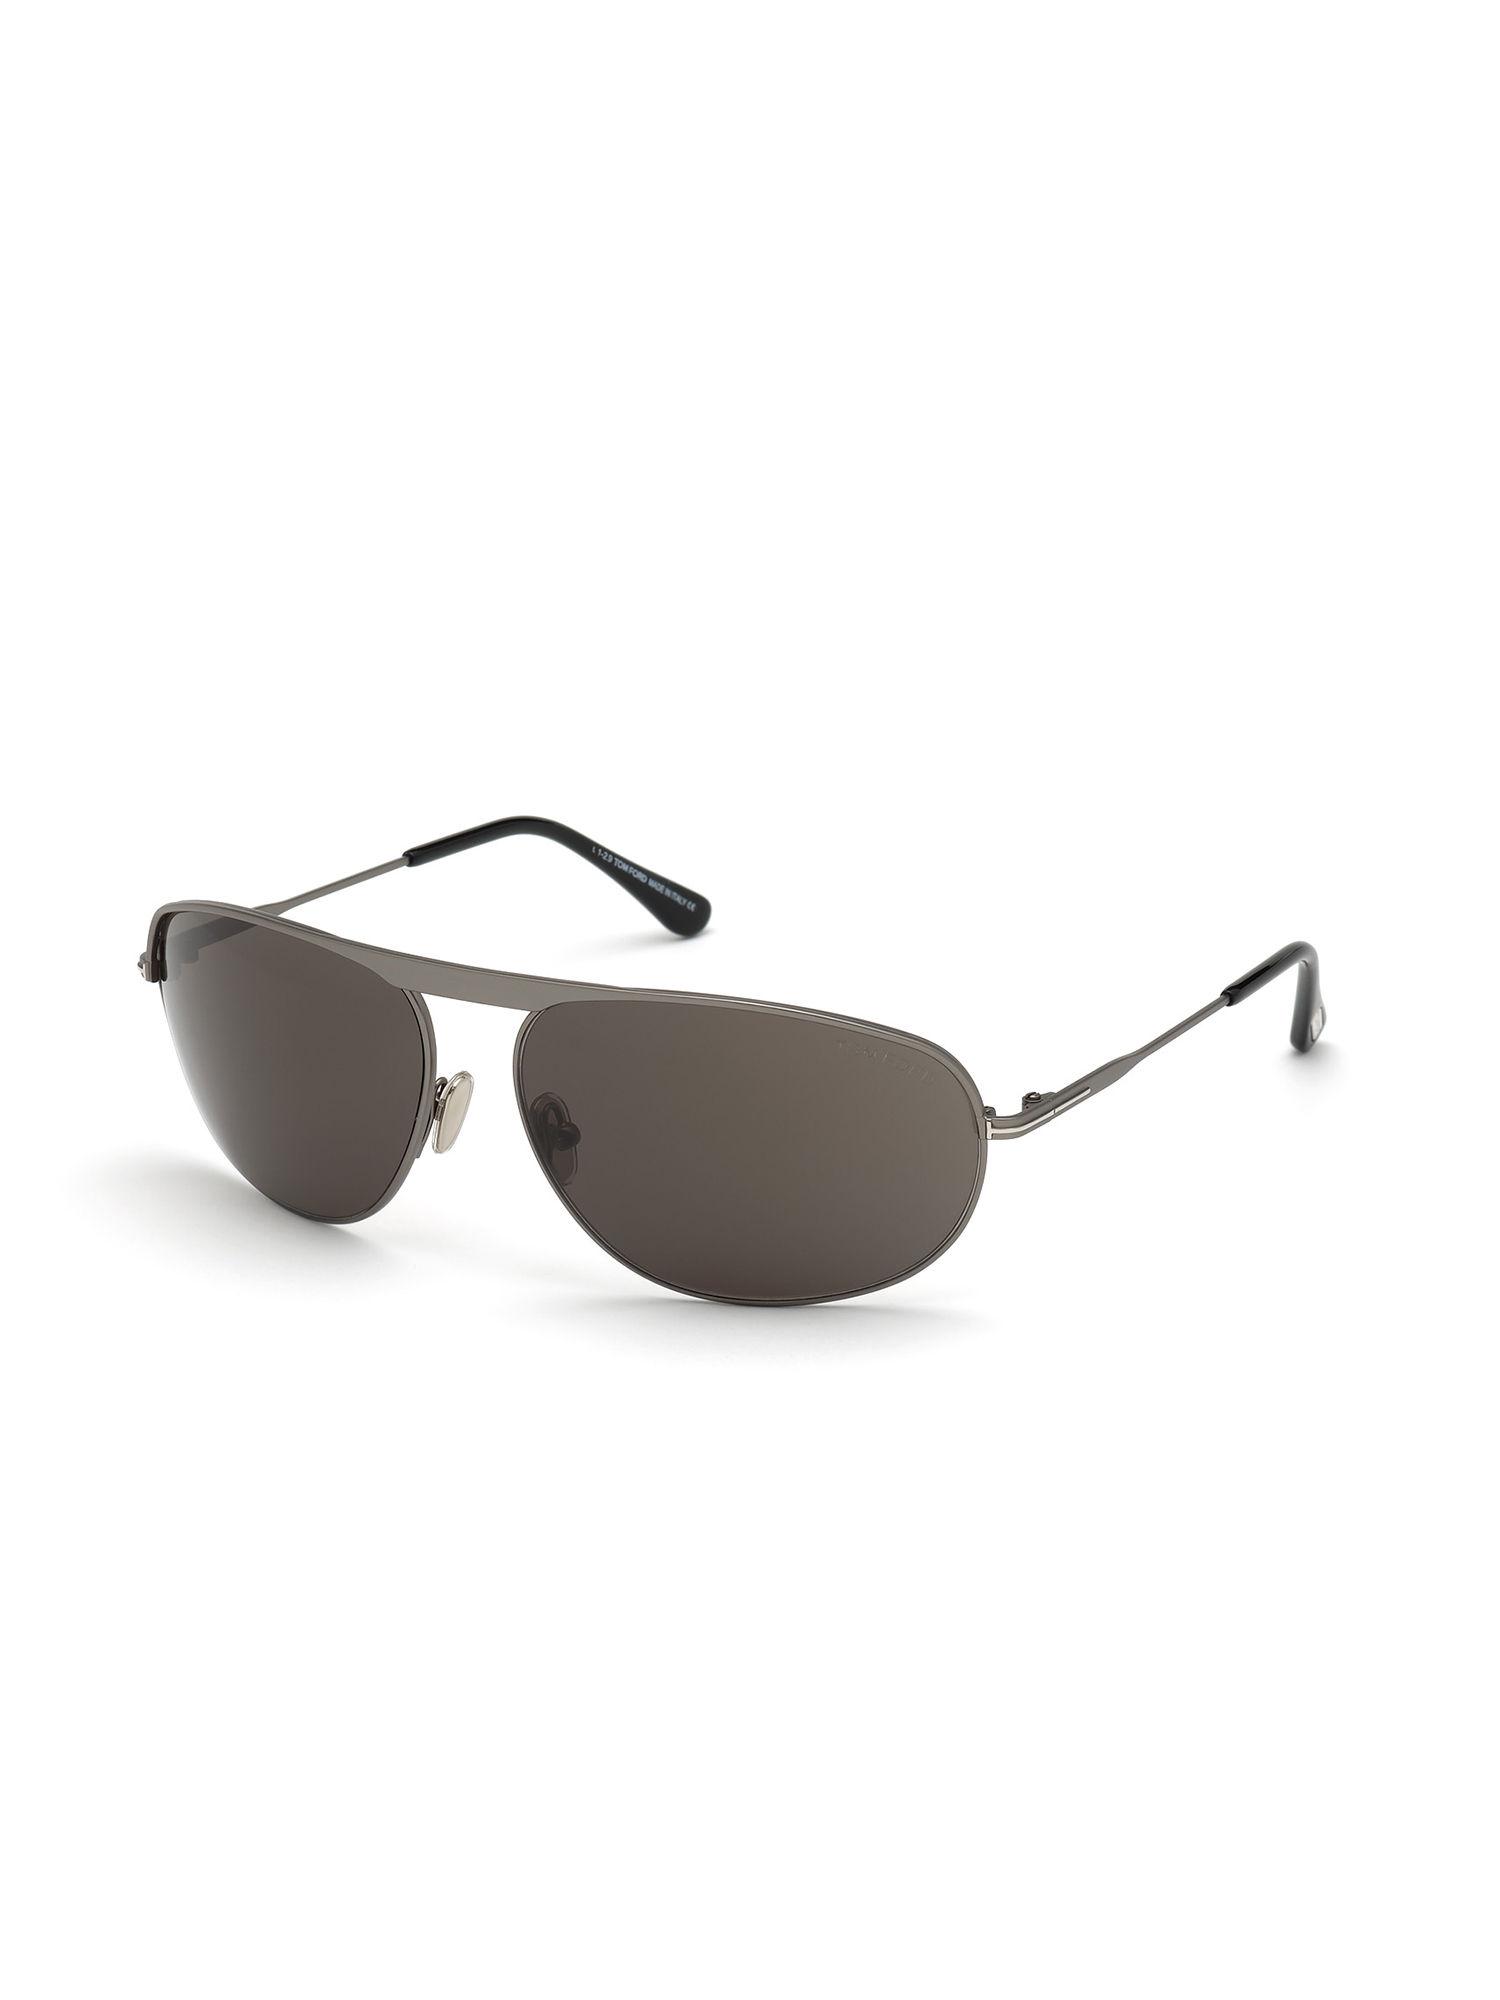 grey metal sunglasses ft0774 63 13a